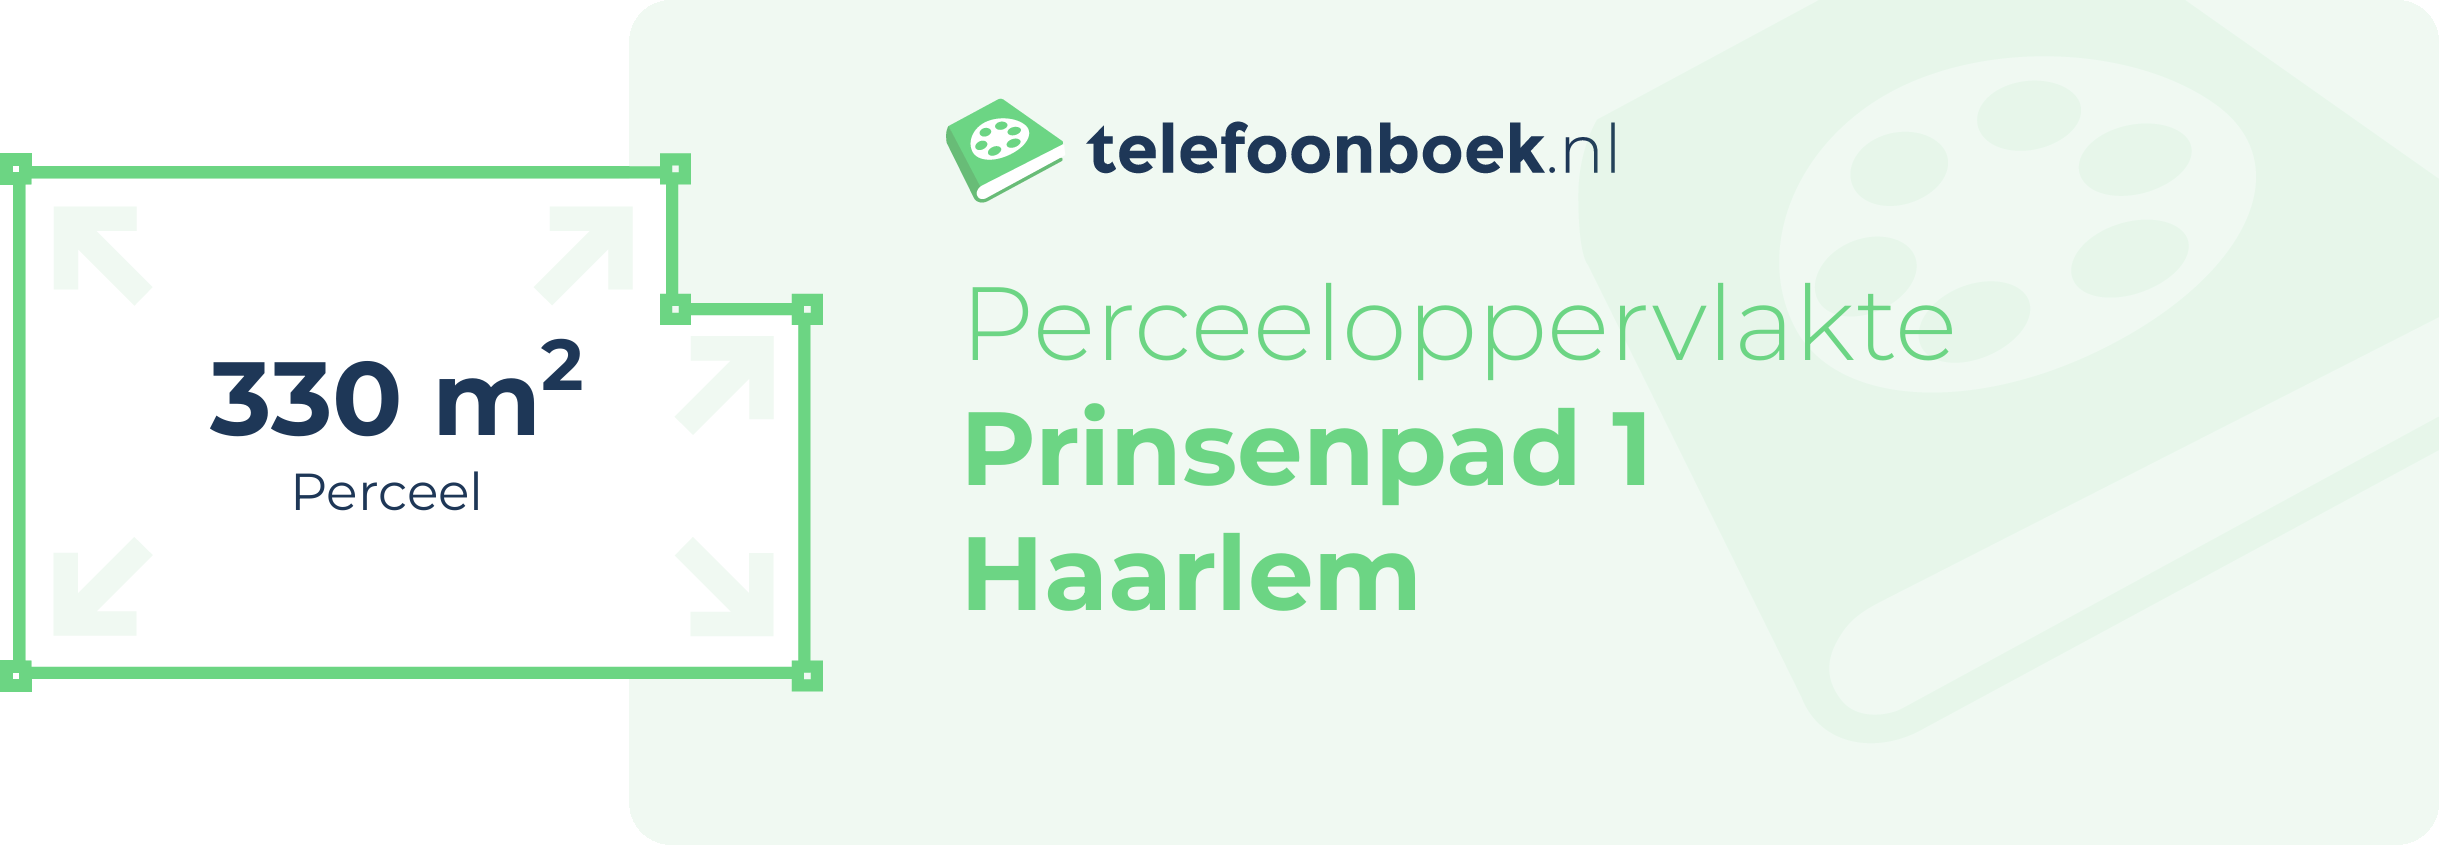 Perceeloppervlakte Prinsenpad 1 Haarlem